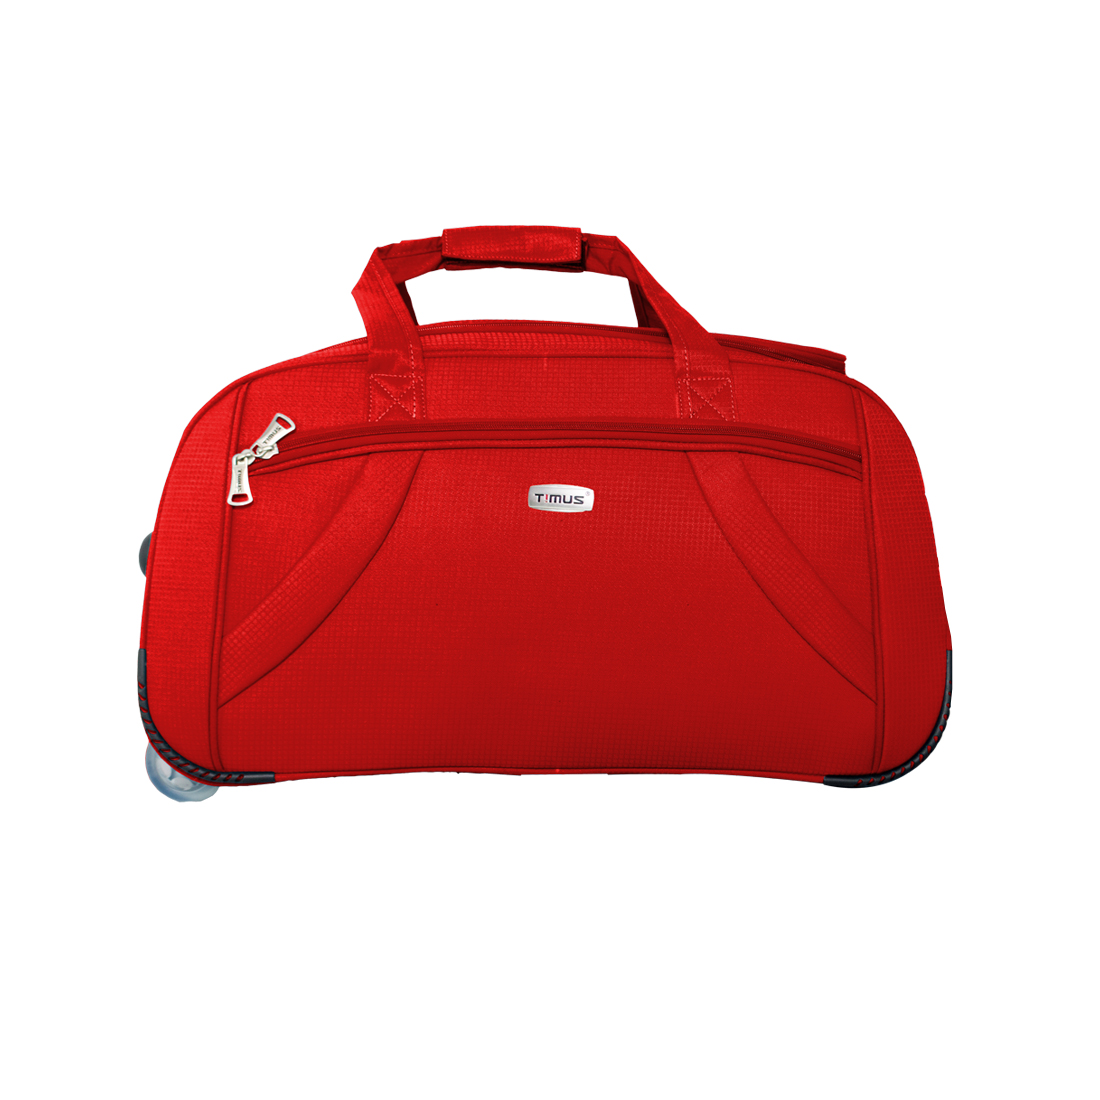 Timus Club Mumbai 55CM Red 2 Wheel Duffle Bag Trolley Bag for Travel  Cabin Luggage 